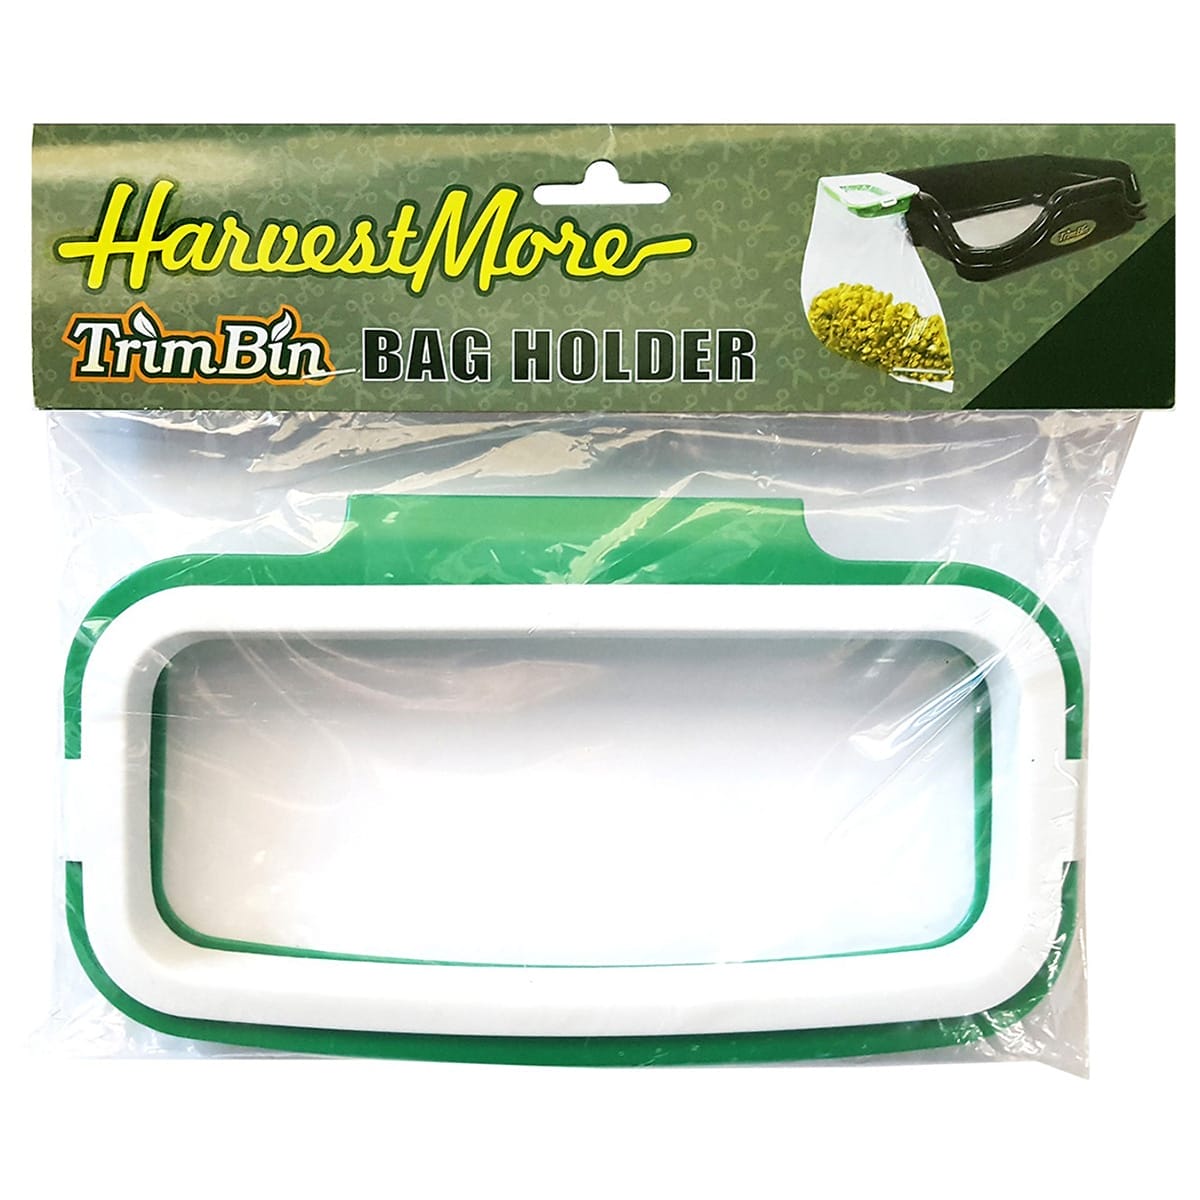 Harvest More TrimBin Bag Holder